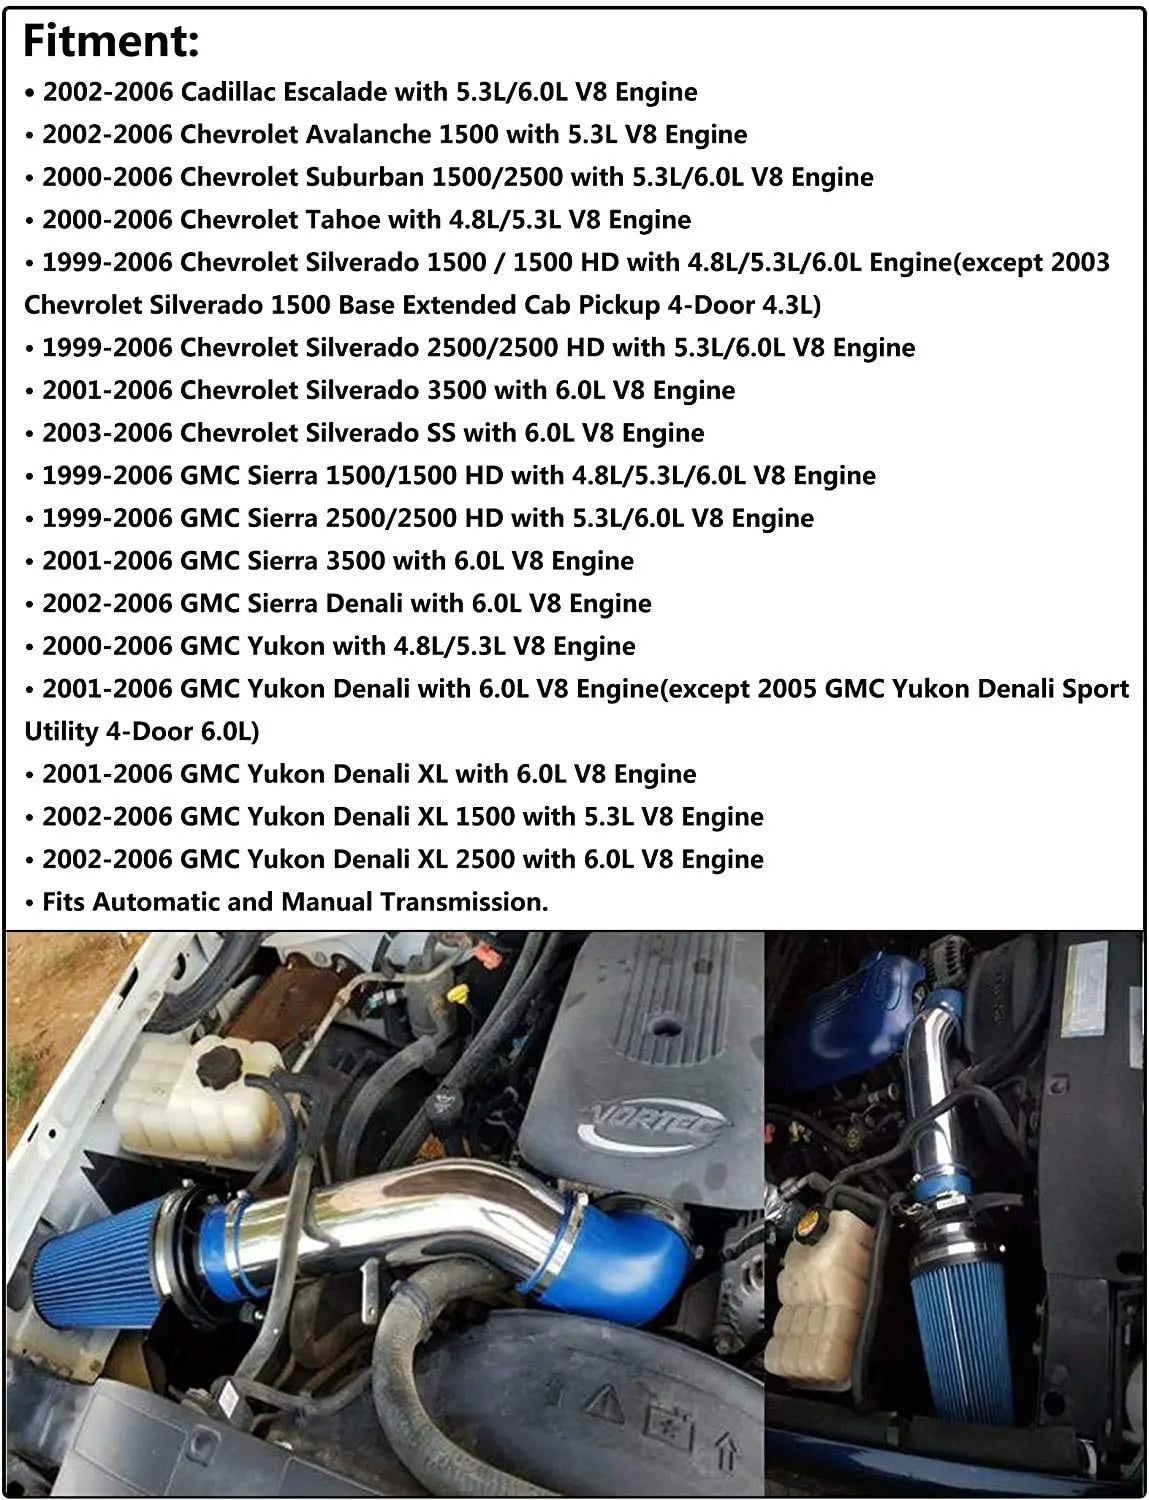 SPELAB 4" Cold Air Intake Kit For 1999-2006 GMC Chevrolet 4.8L 5.3L 6.0L V8 Engine SPELAB